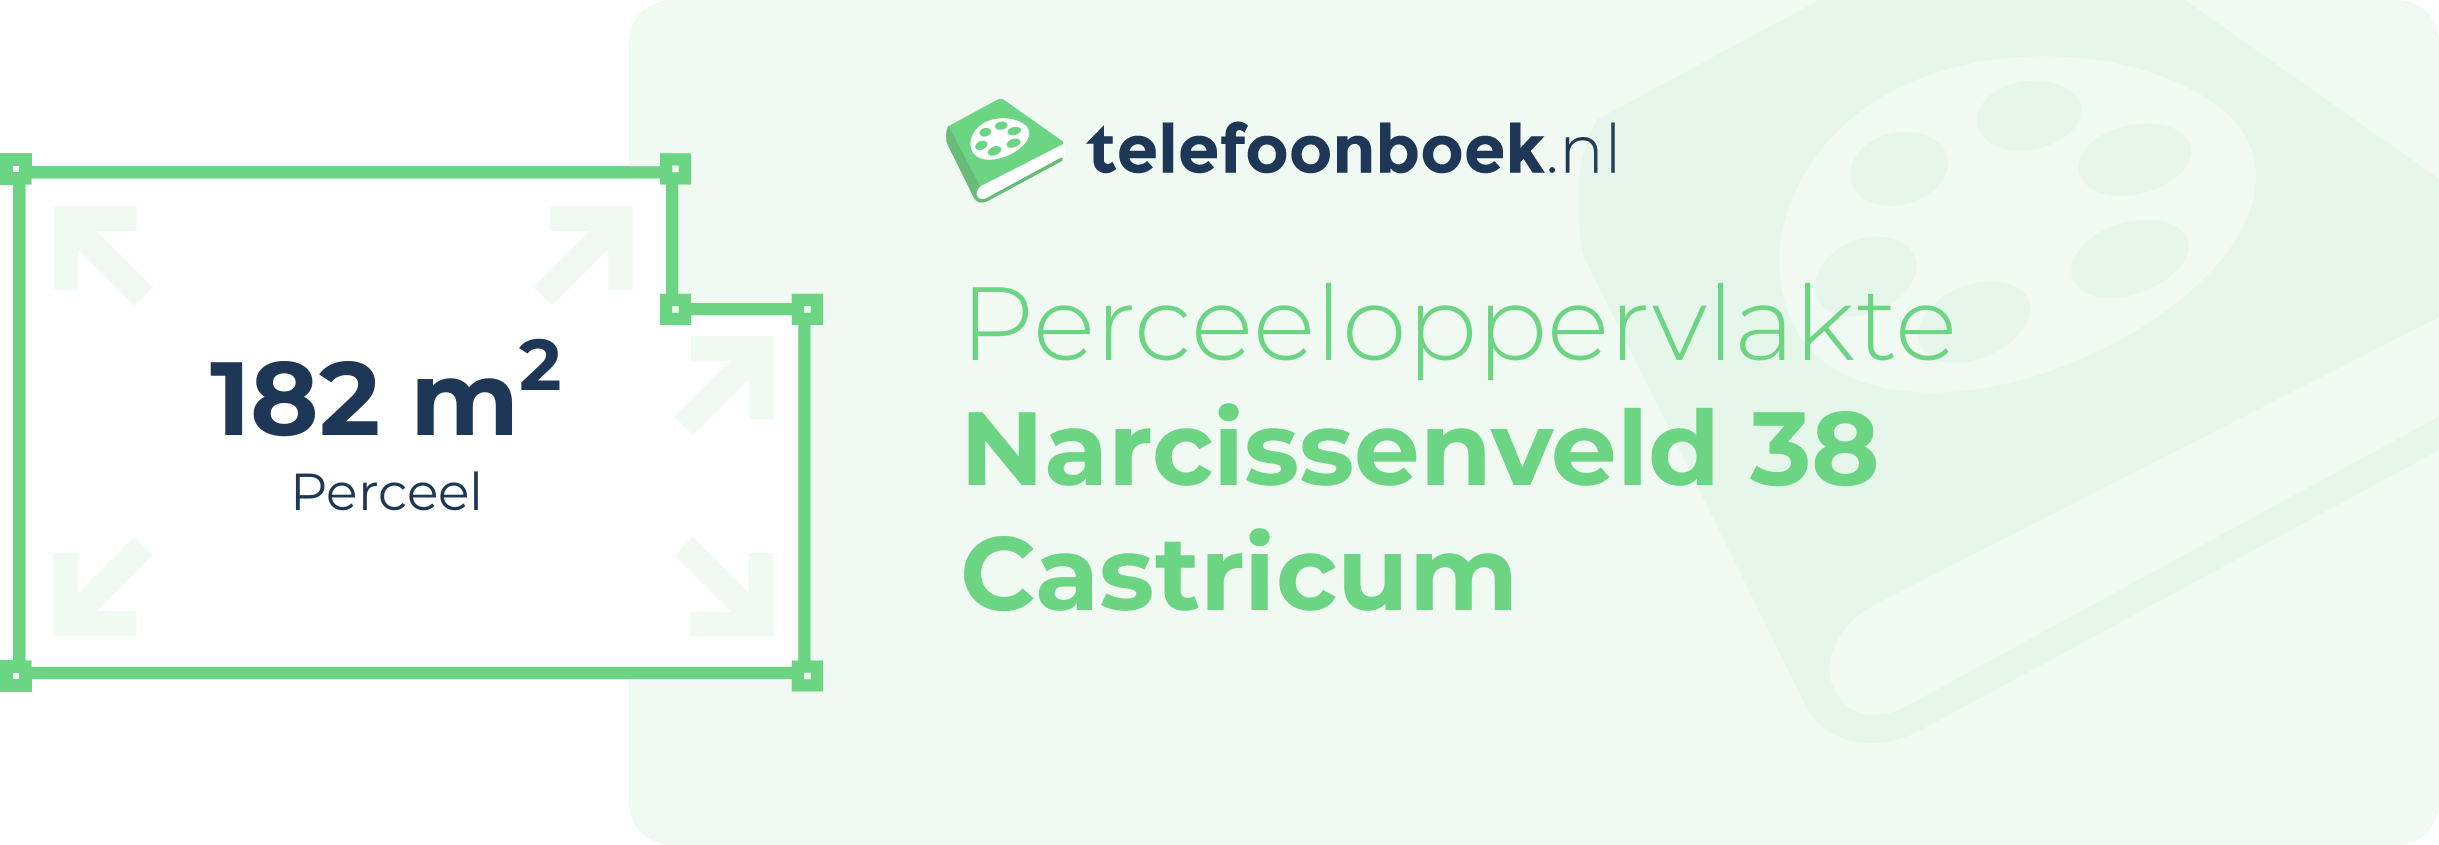 Perceeloppervlakte Narcissenveld 38 Castricum